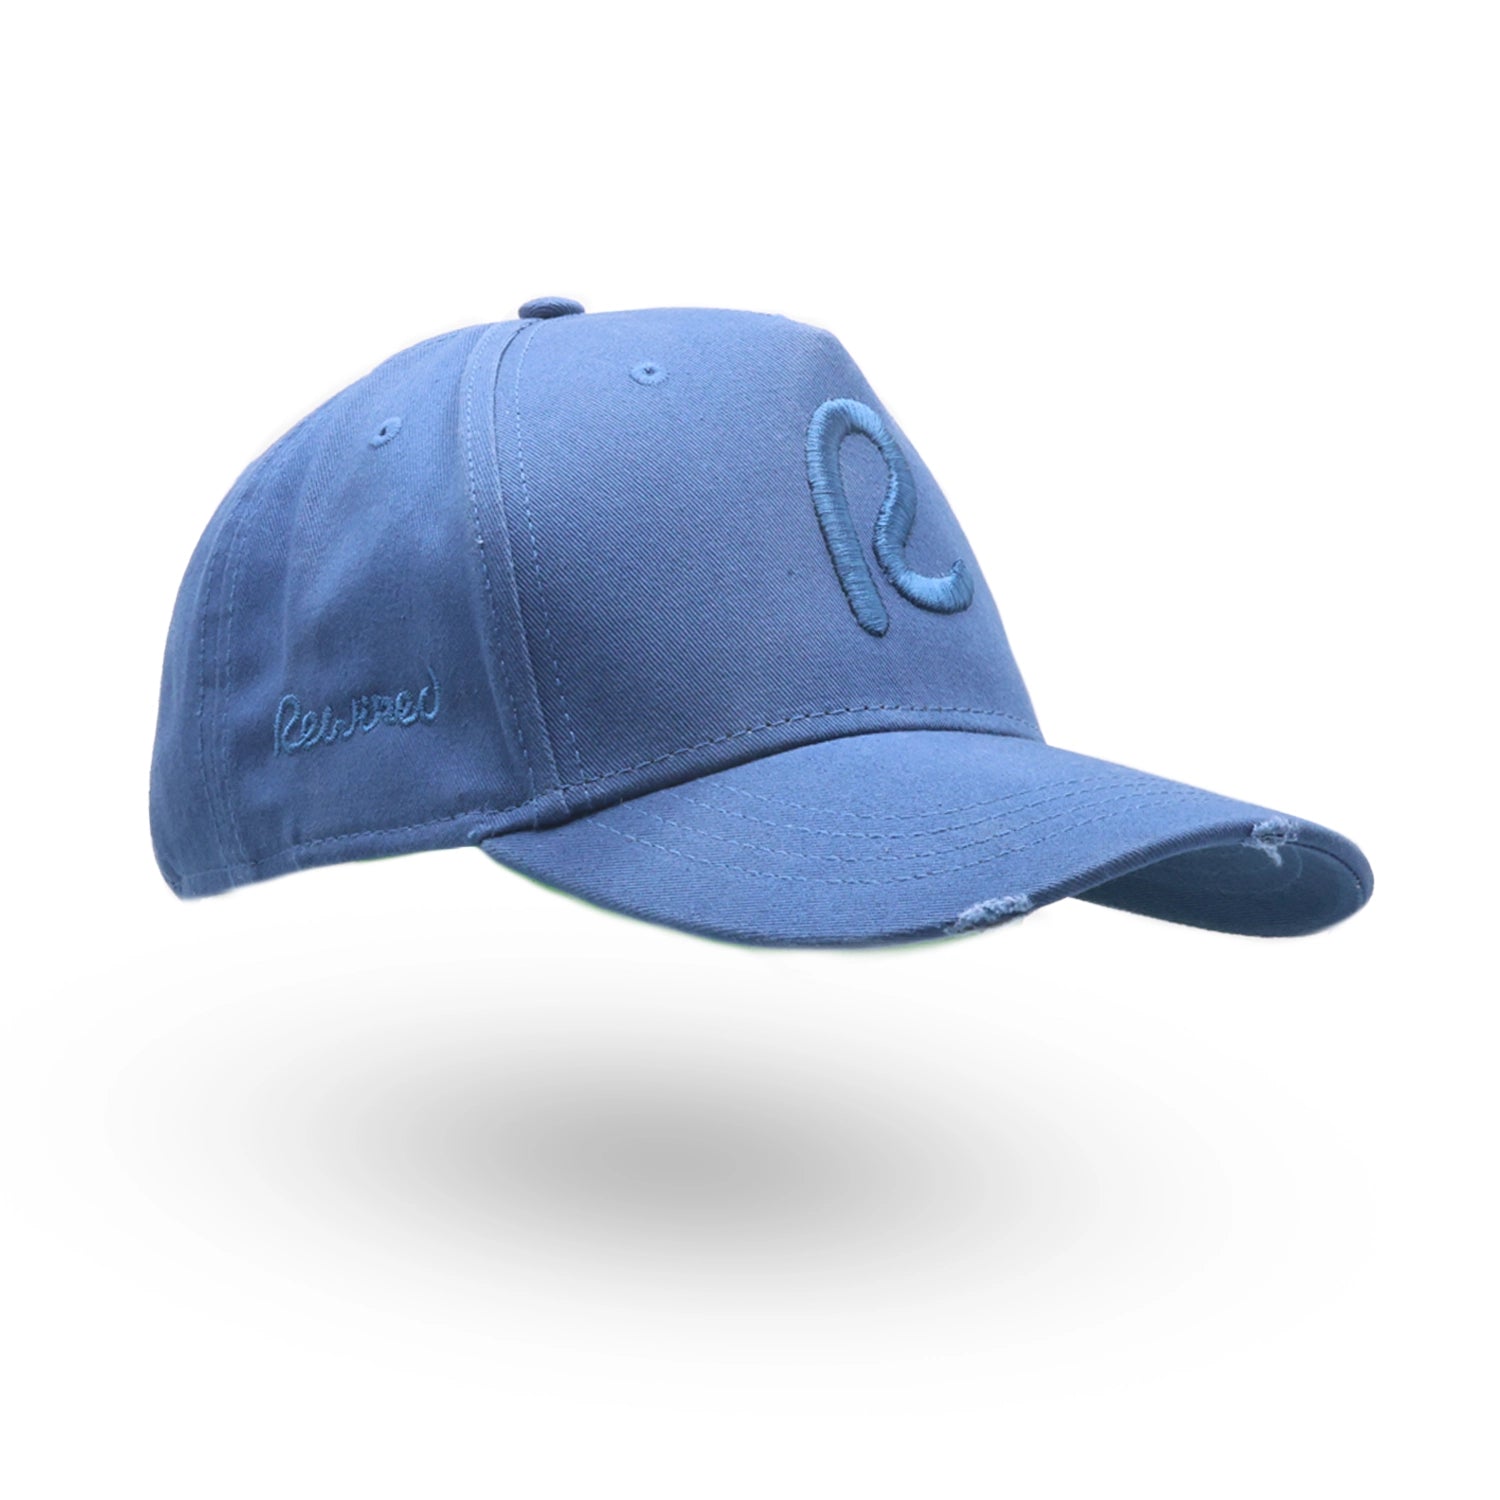 Rewired Distressed Classic Baseball Cap - Sky Blue